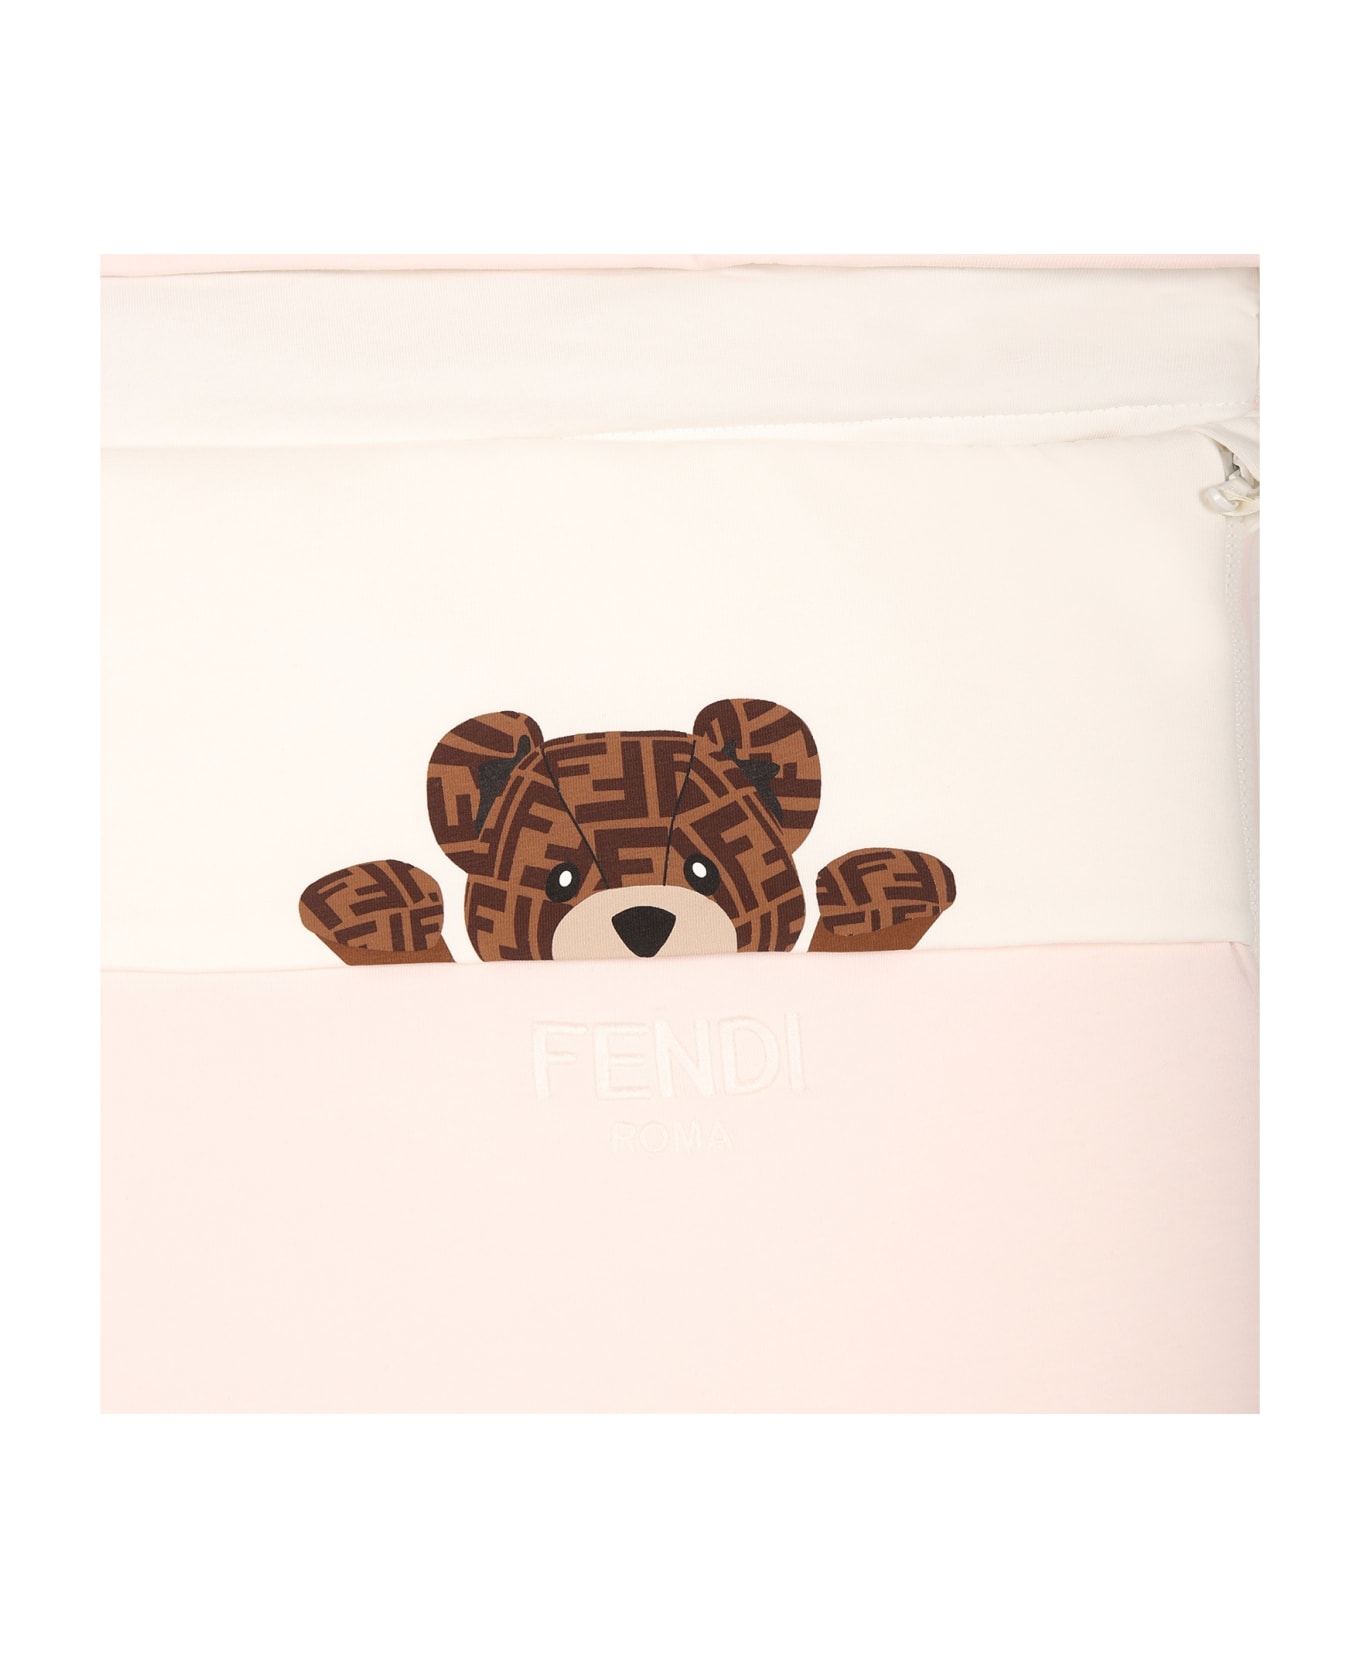 Fendi Pink Sleeping Bag For Baby Girl With Bear And Fendi Logo - Pink